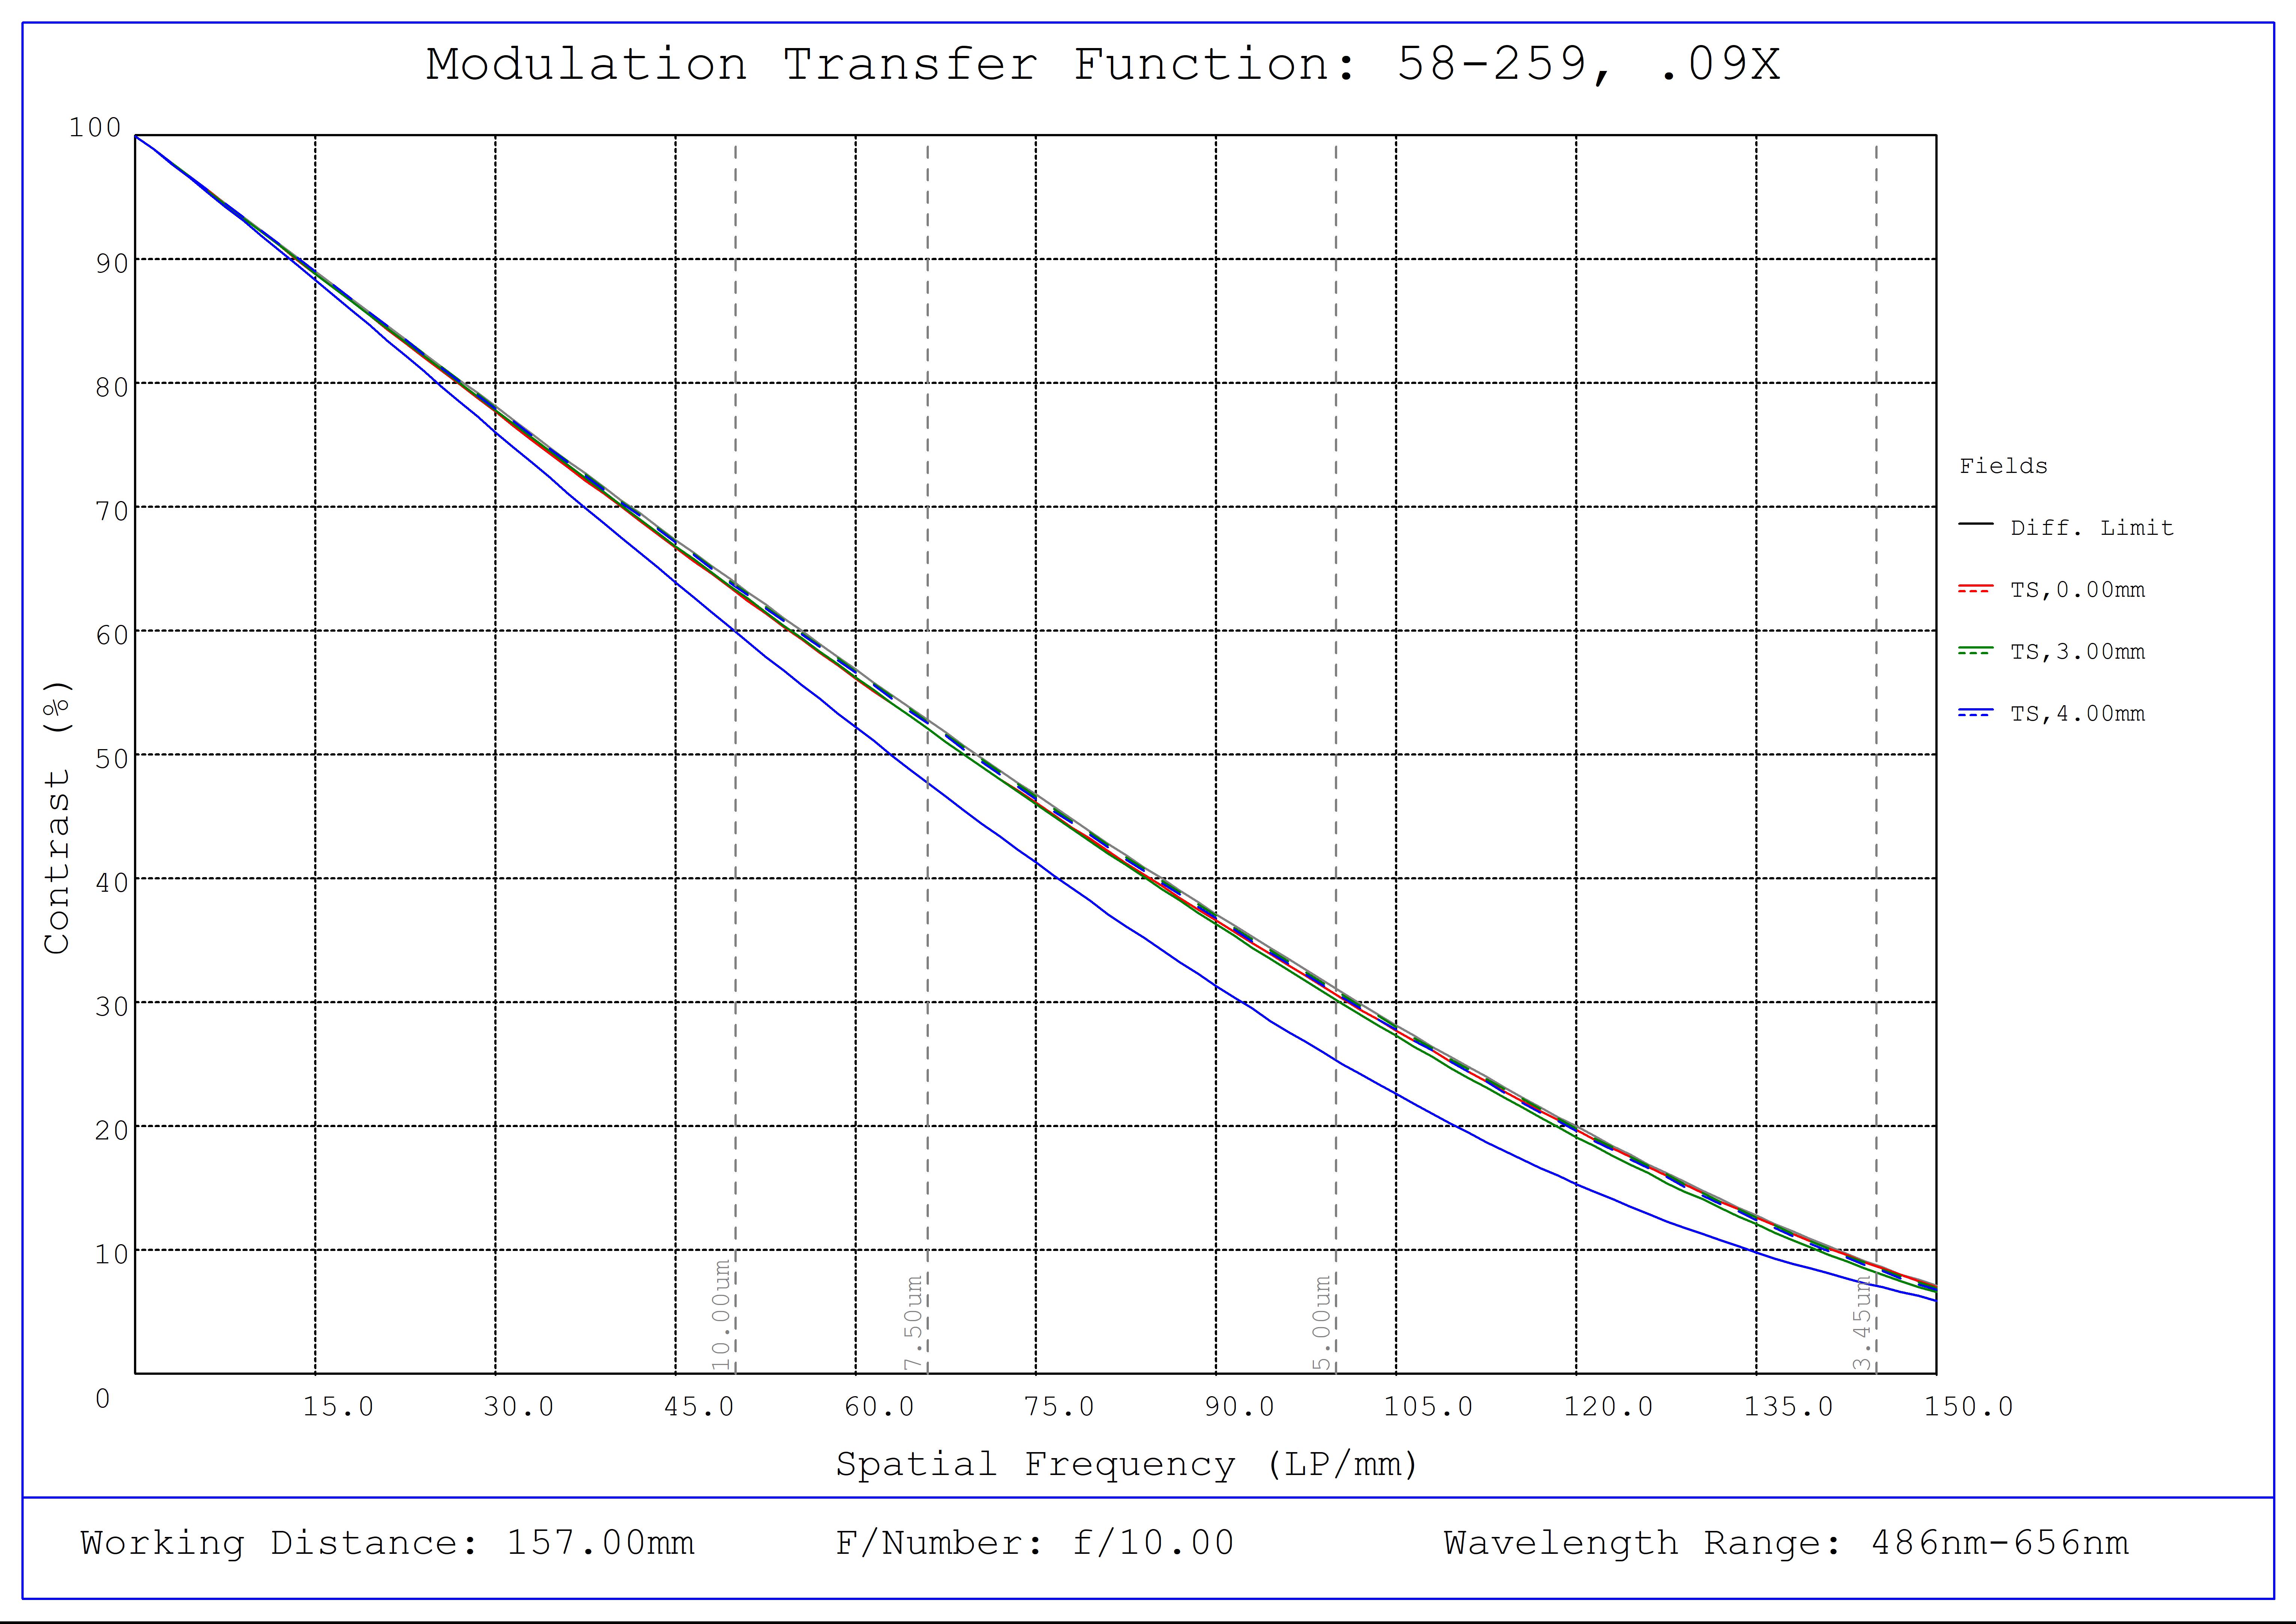 #58-259, 0.09X ½" GoldTL™ Telecentric Lens, Modulated Transfer Function (MTF) Plot, 157mm Working Distance, f10